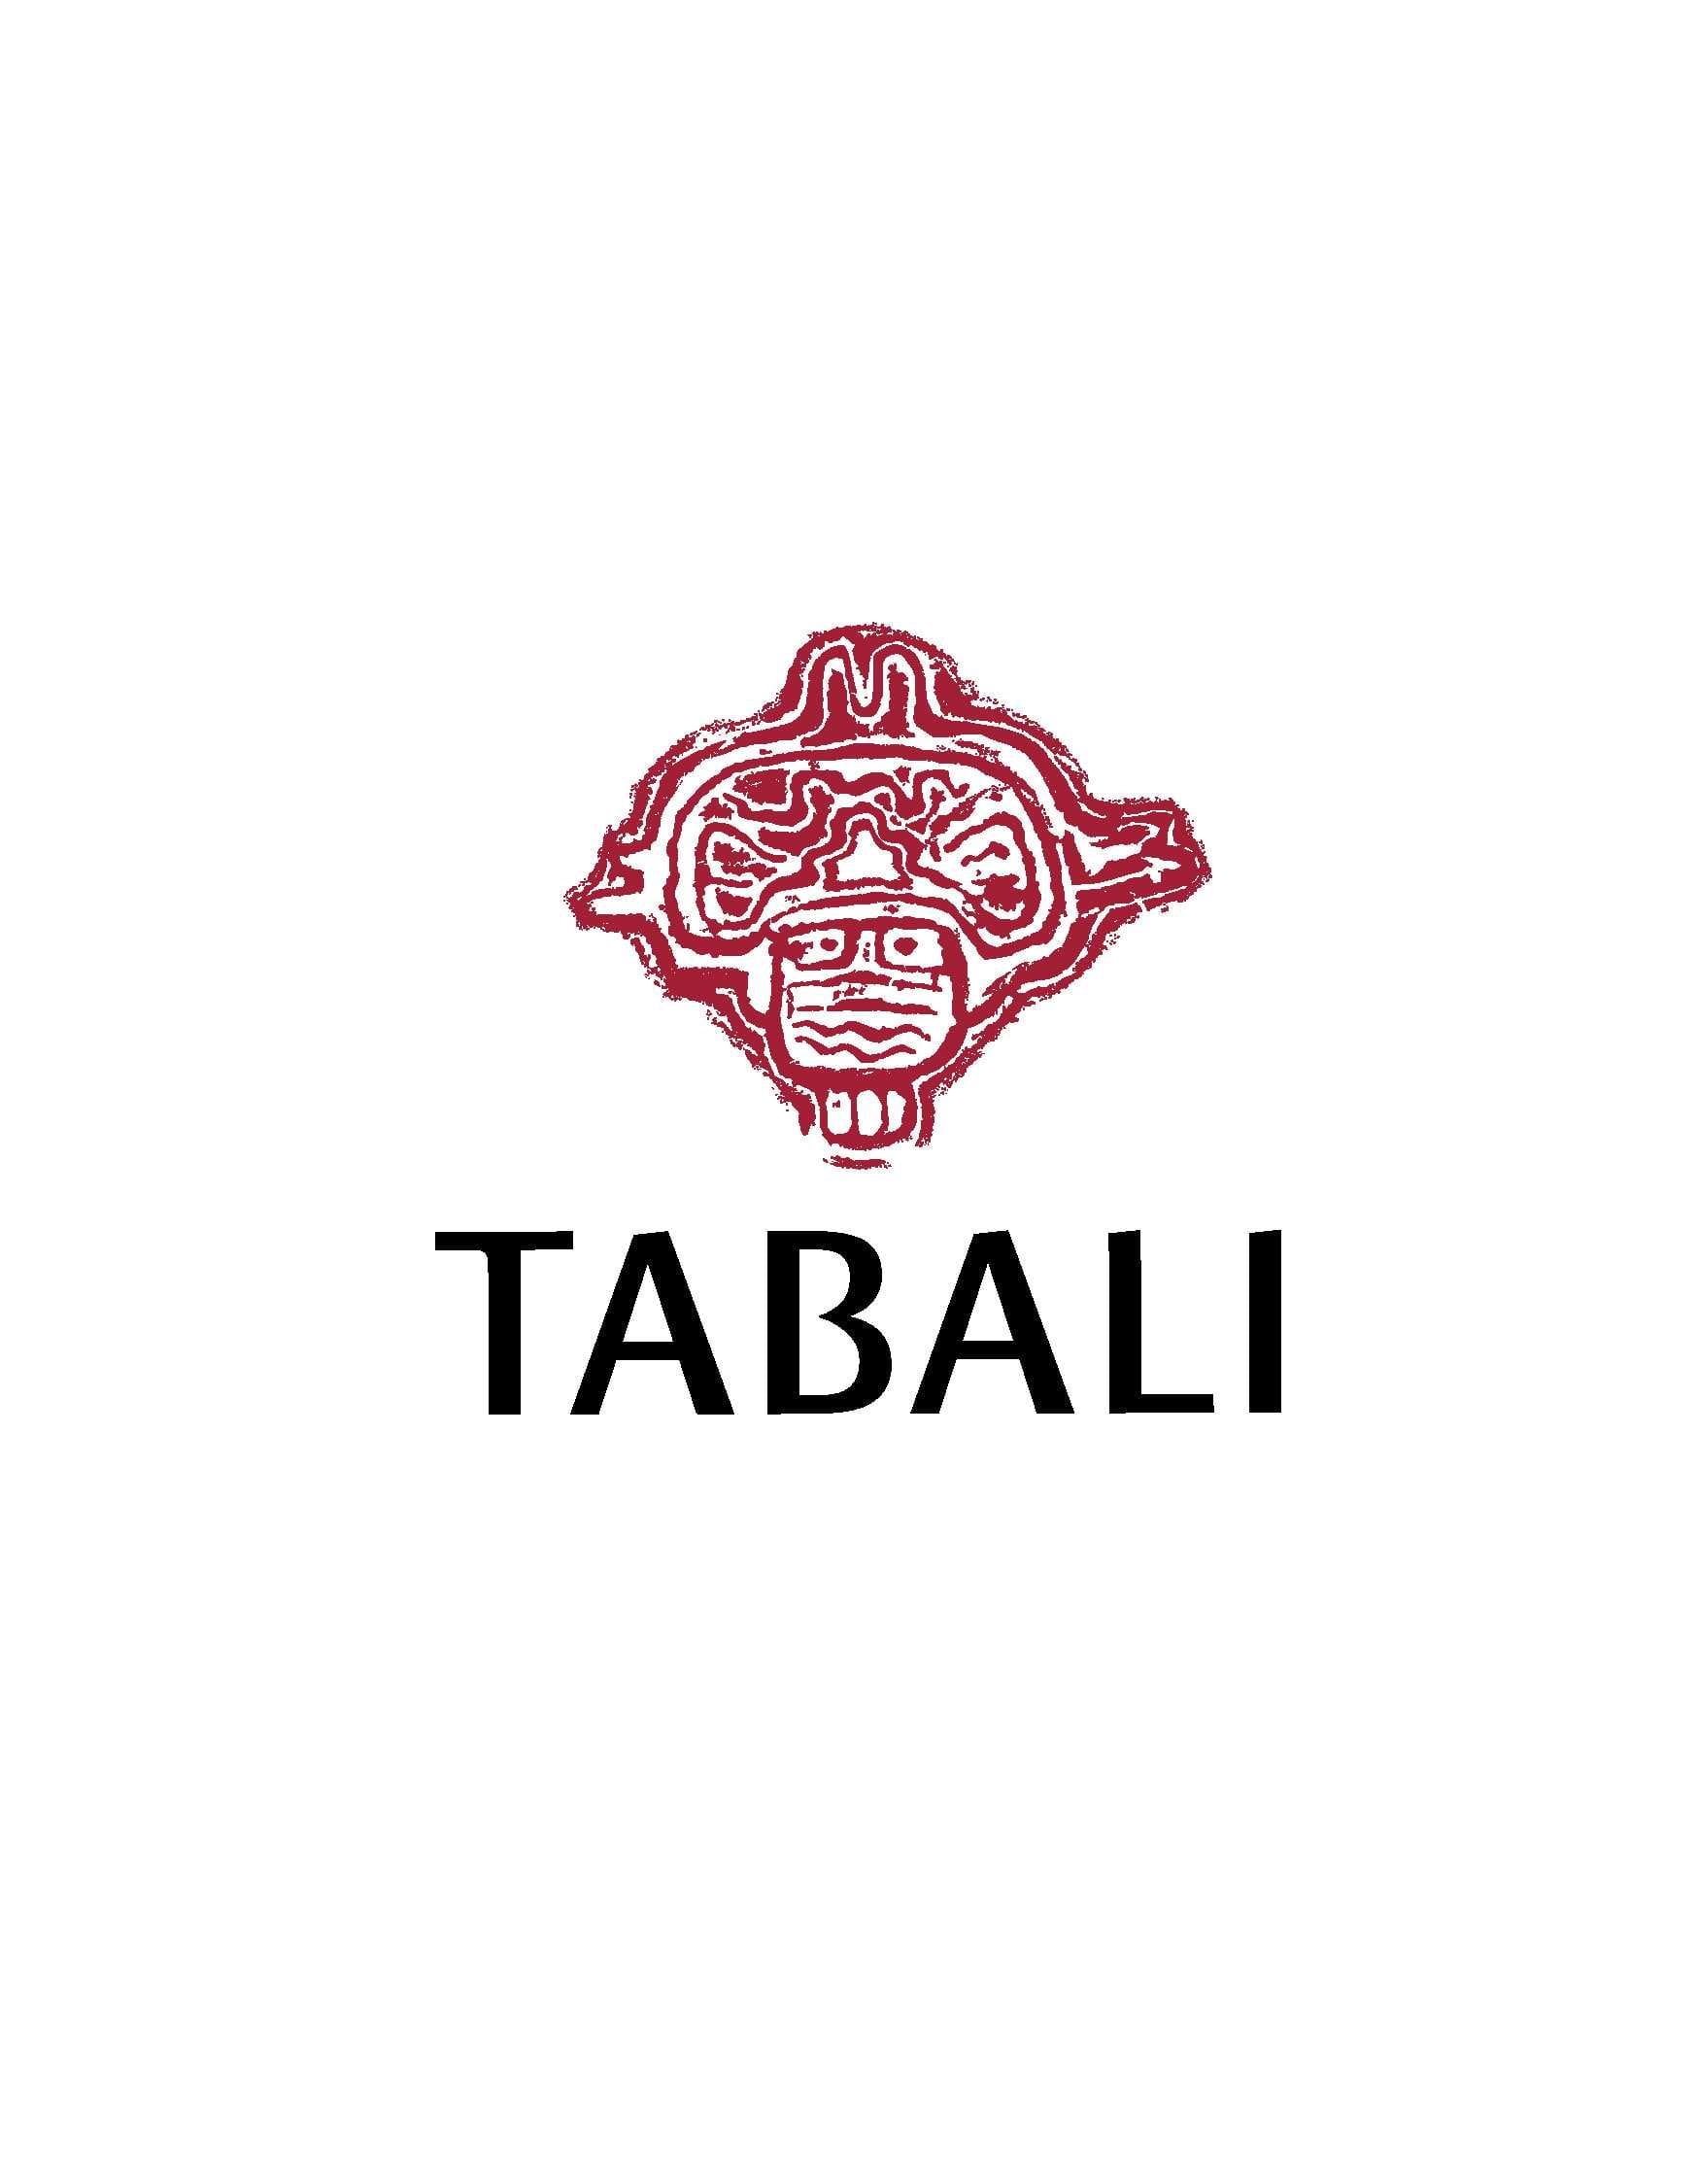 TABALI